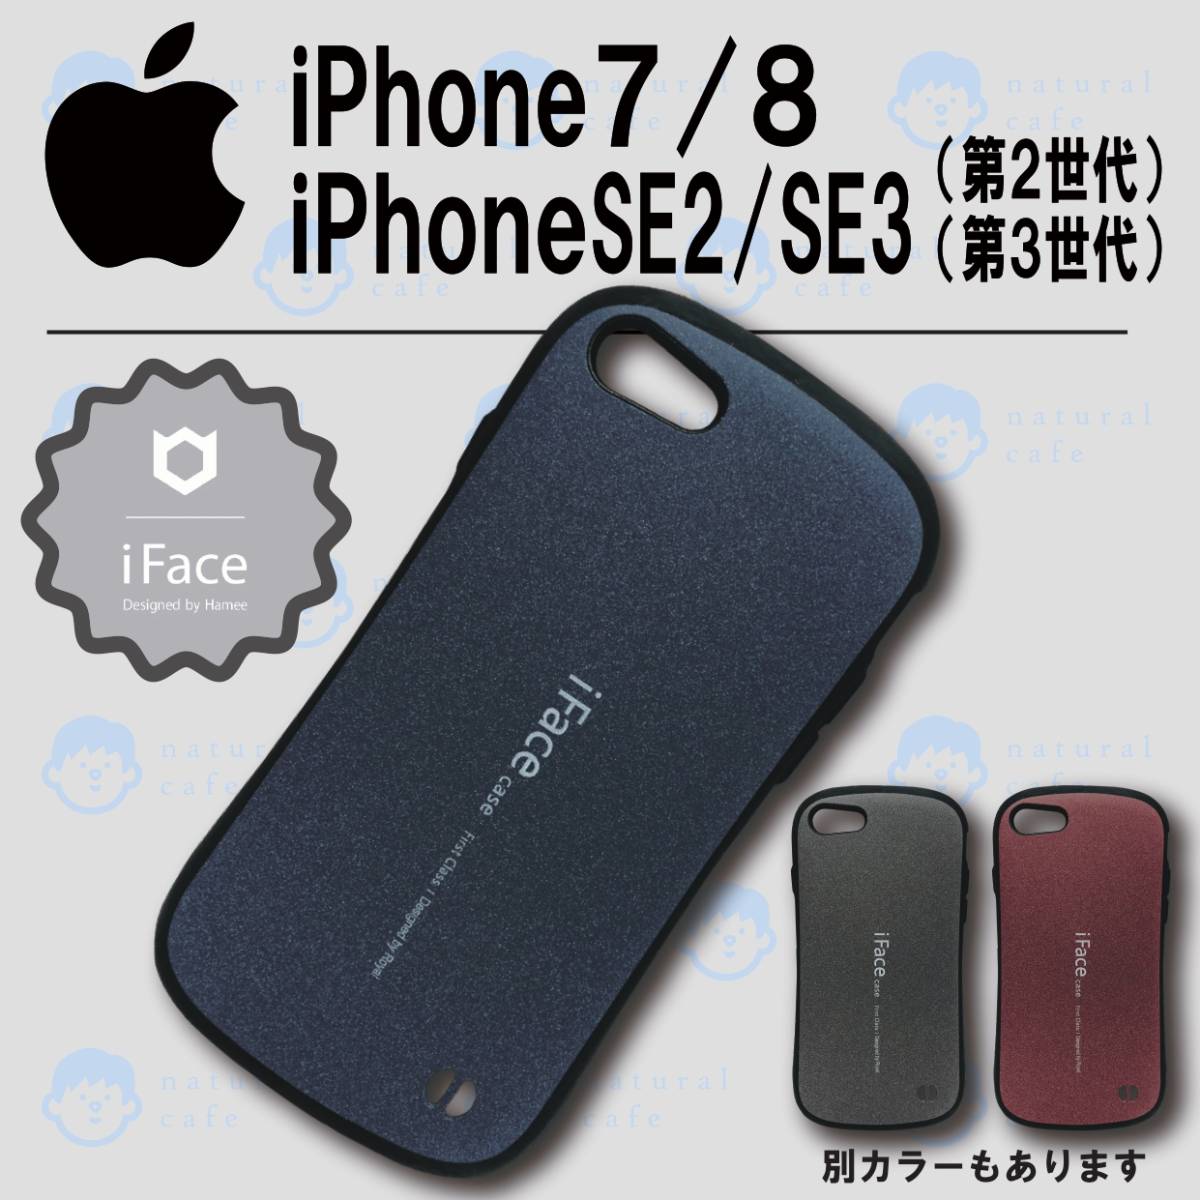 ヤフオク! -iphone se (新品 未使用 未開封)の中古品・新品・未使用品一覧